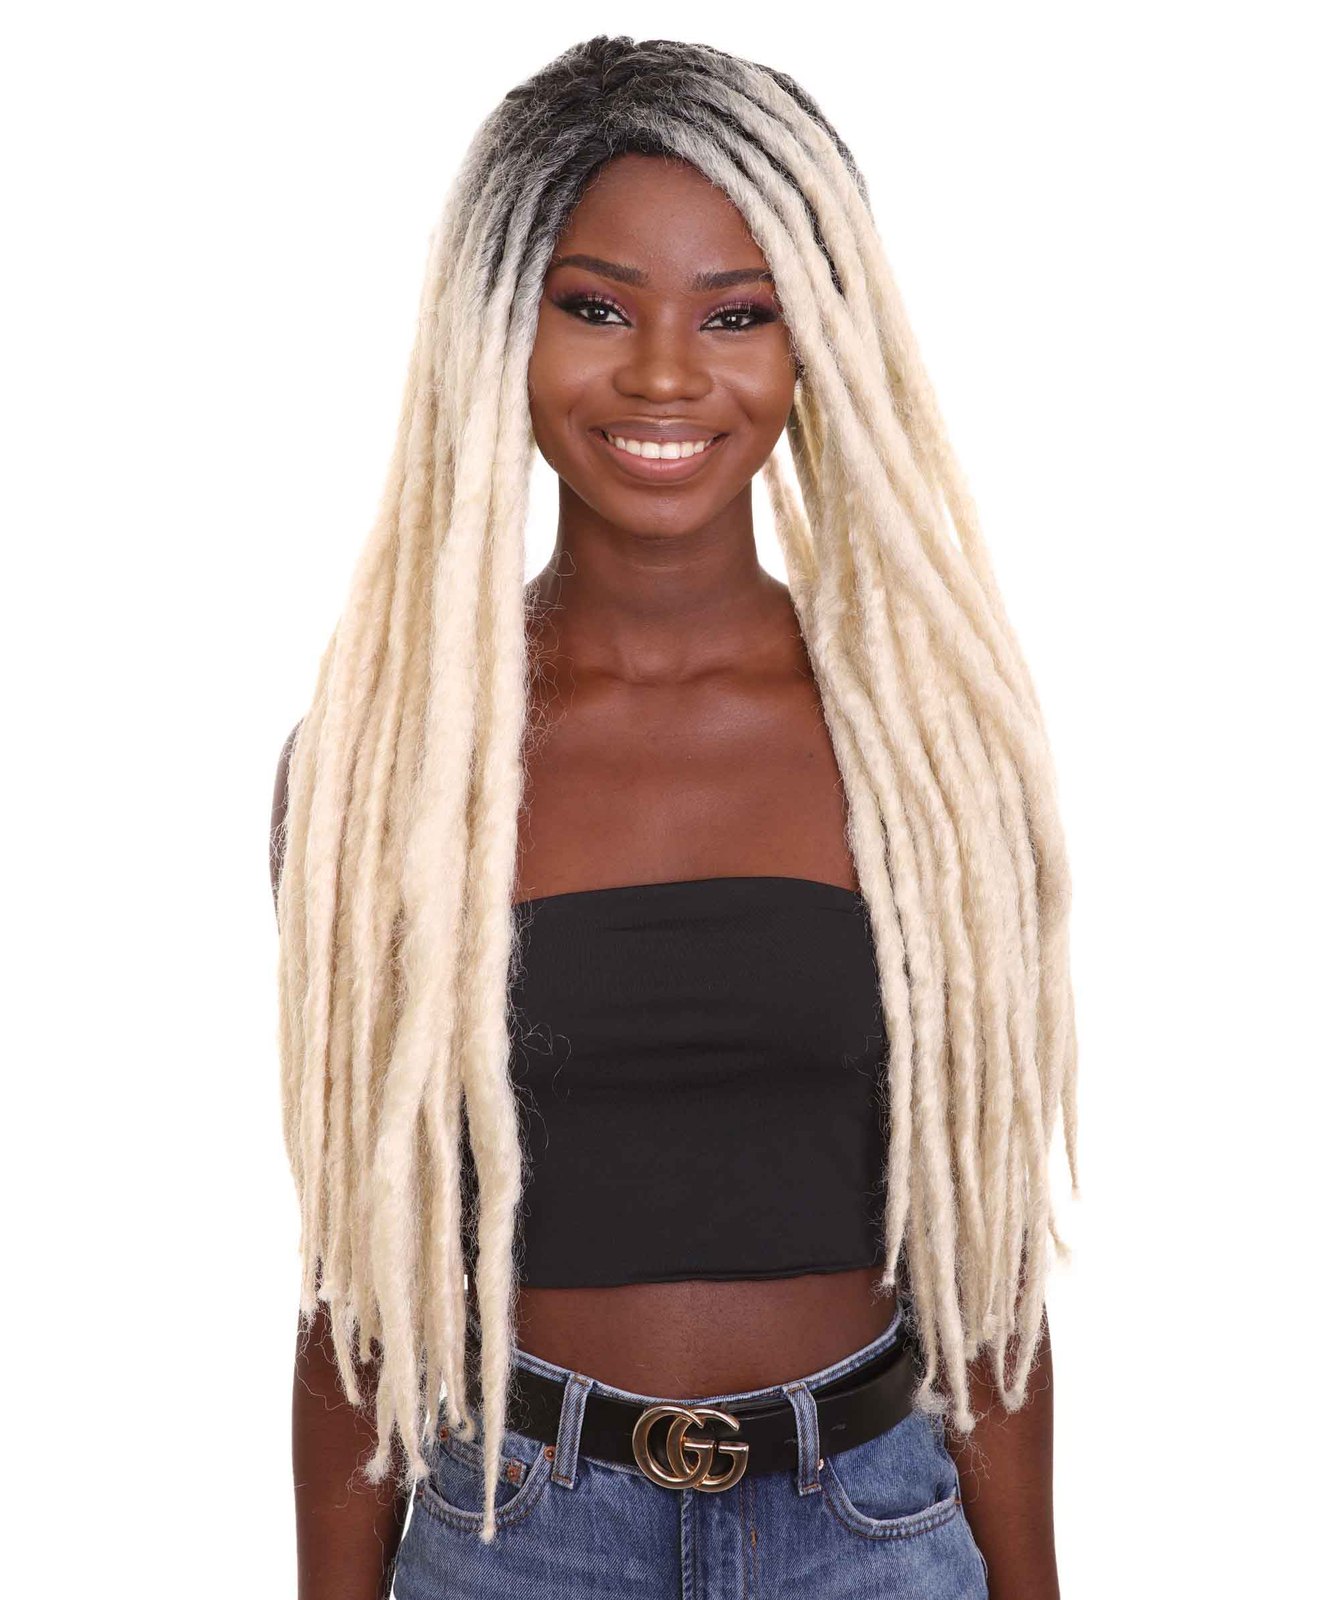 Adult Women's Long Dreadlocks Wig - Multiple Color Options HW-6724